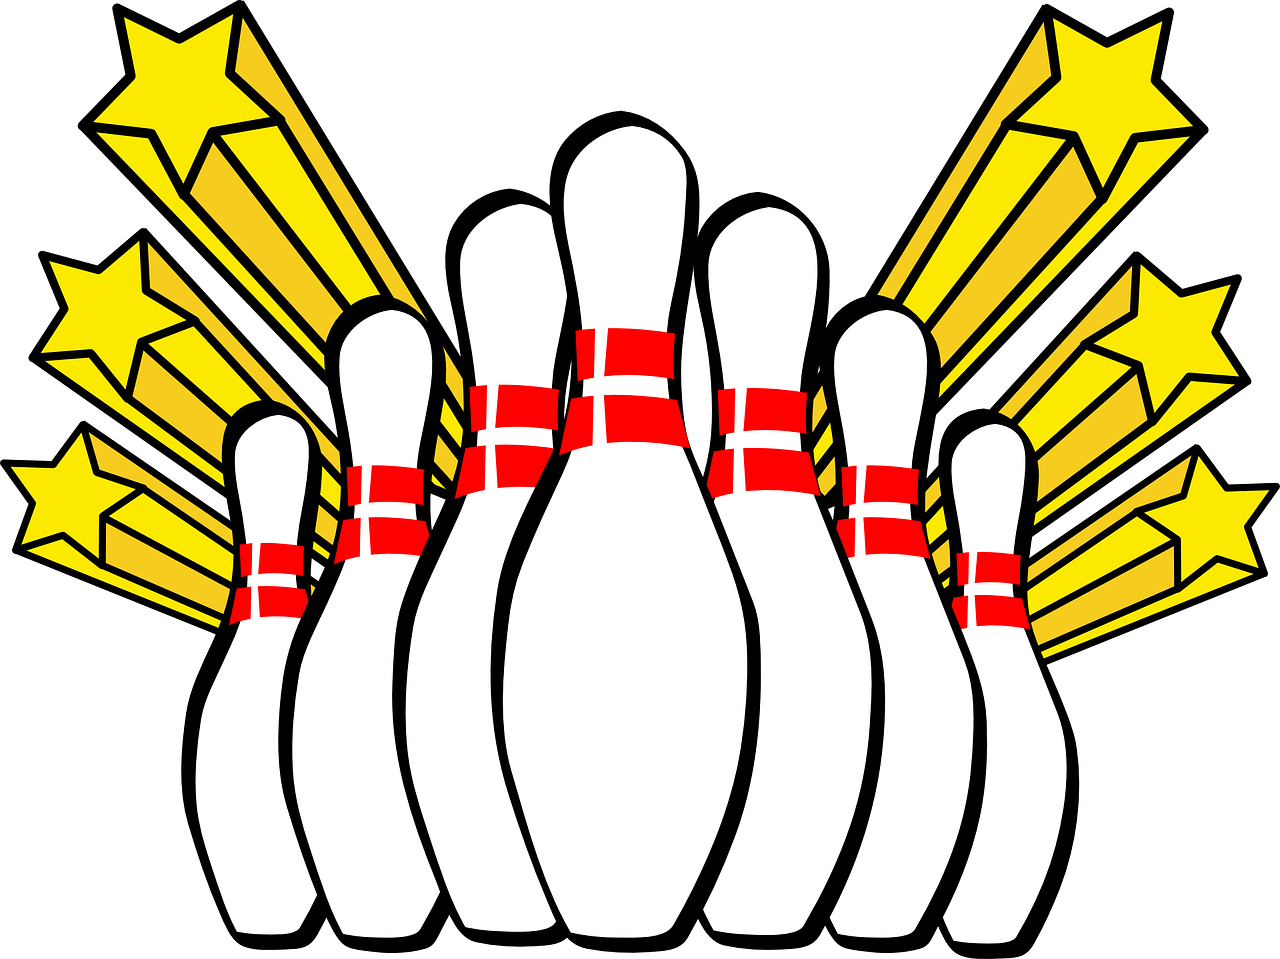 Striking Bowling Pins Illustration PNG